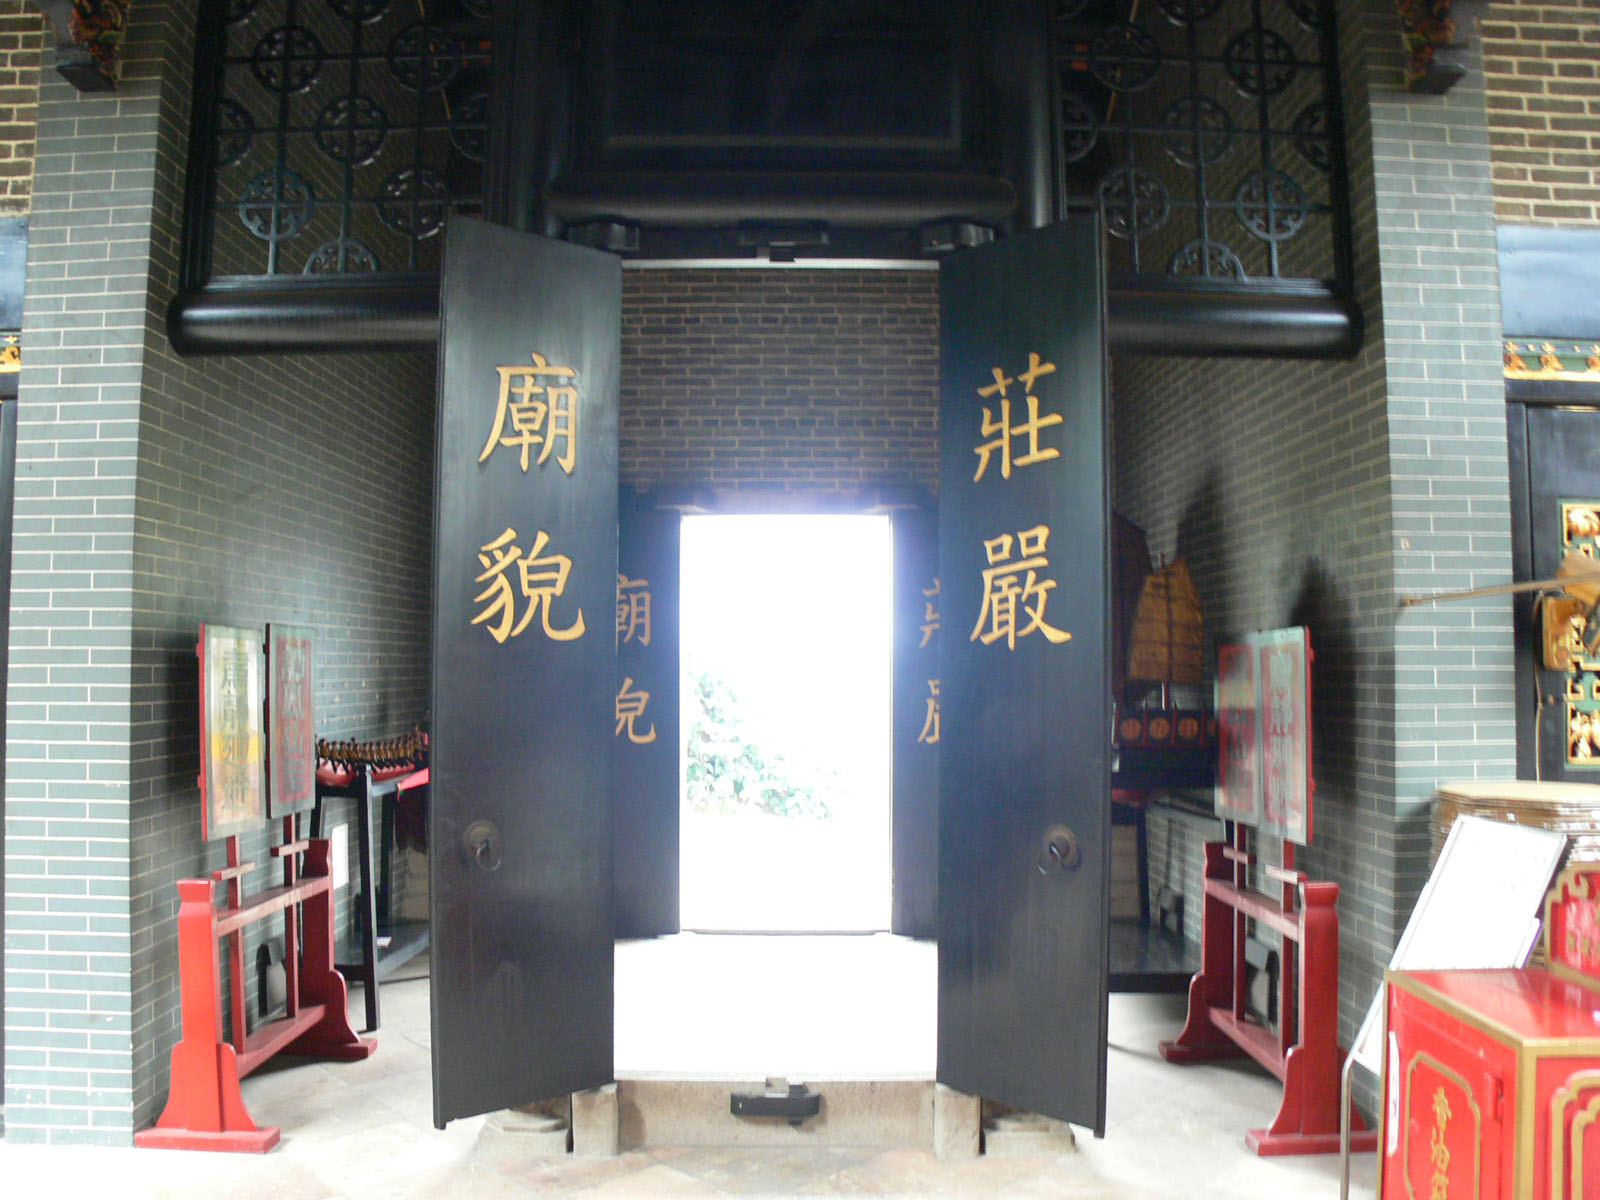 Photo 3: Tam Kung Temple (Shau Kei Wan)